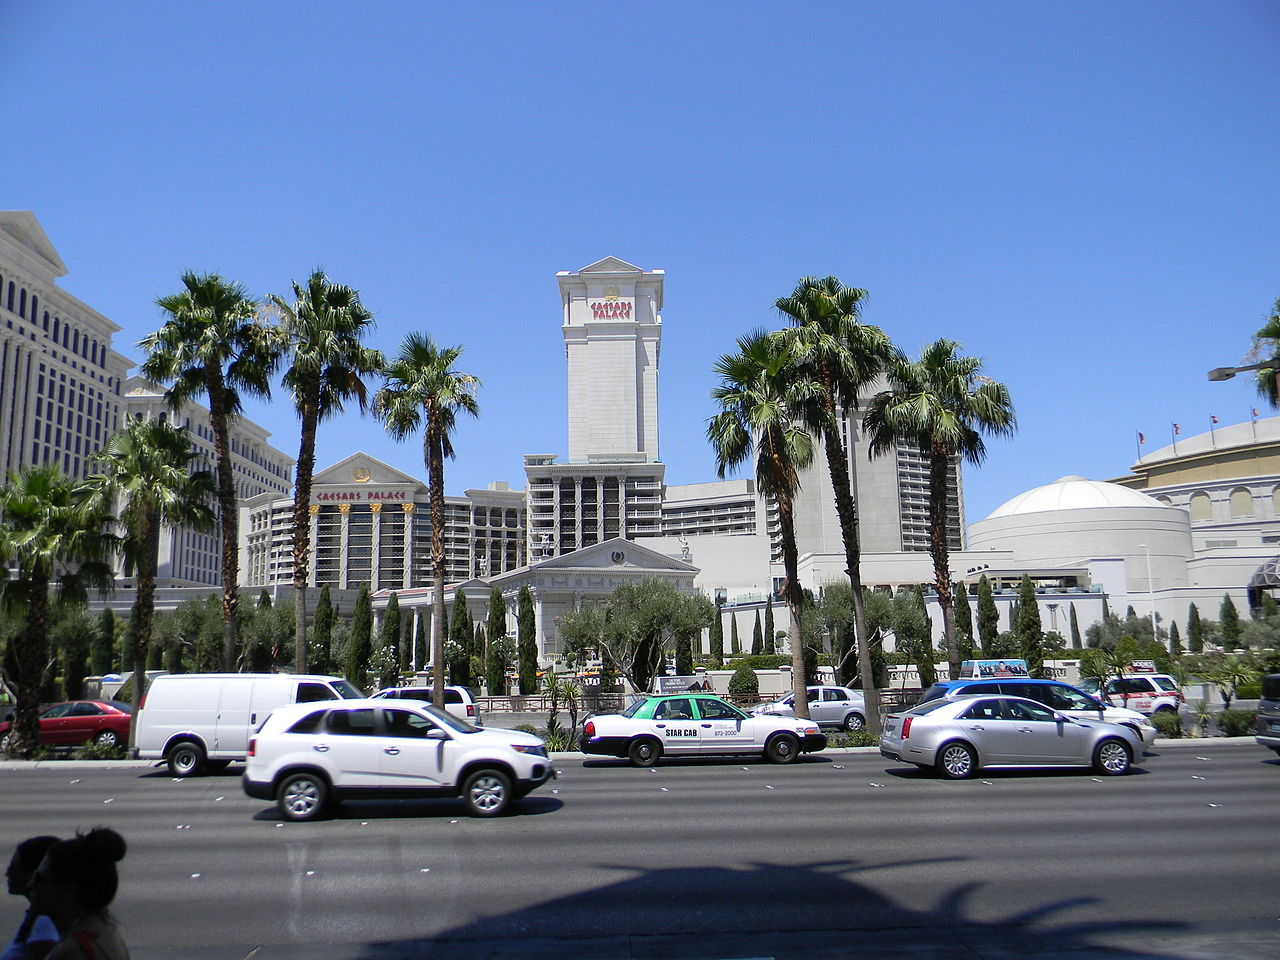 Caesars Palace Las Vegas Photos and Premium High Res Pictures